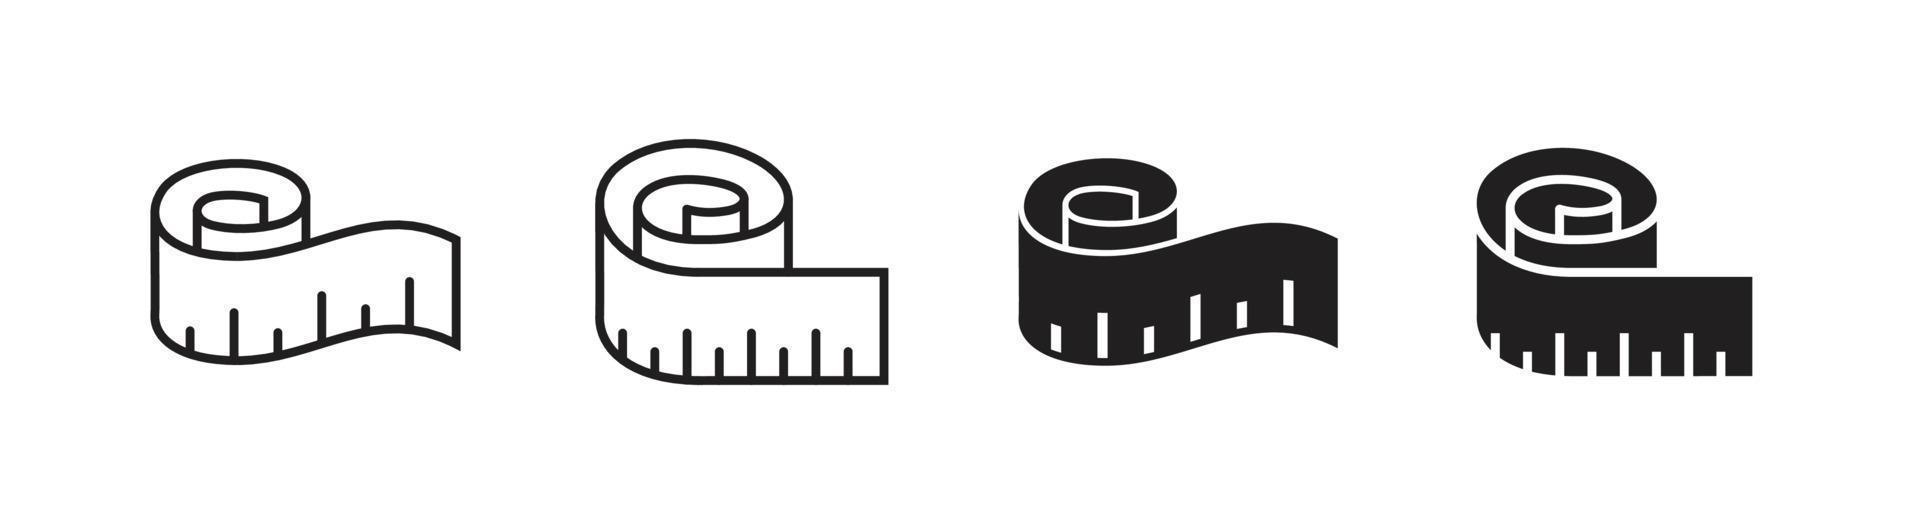 Tape measure icon design element suitable for websites, print design or app vector